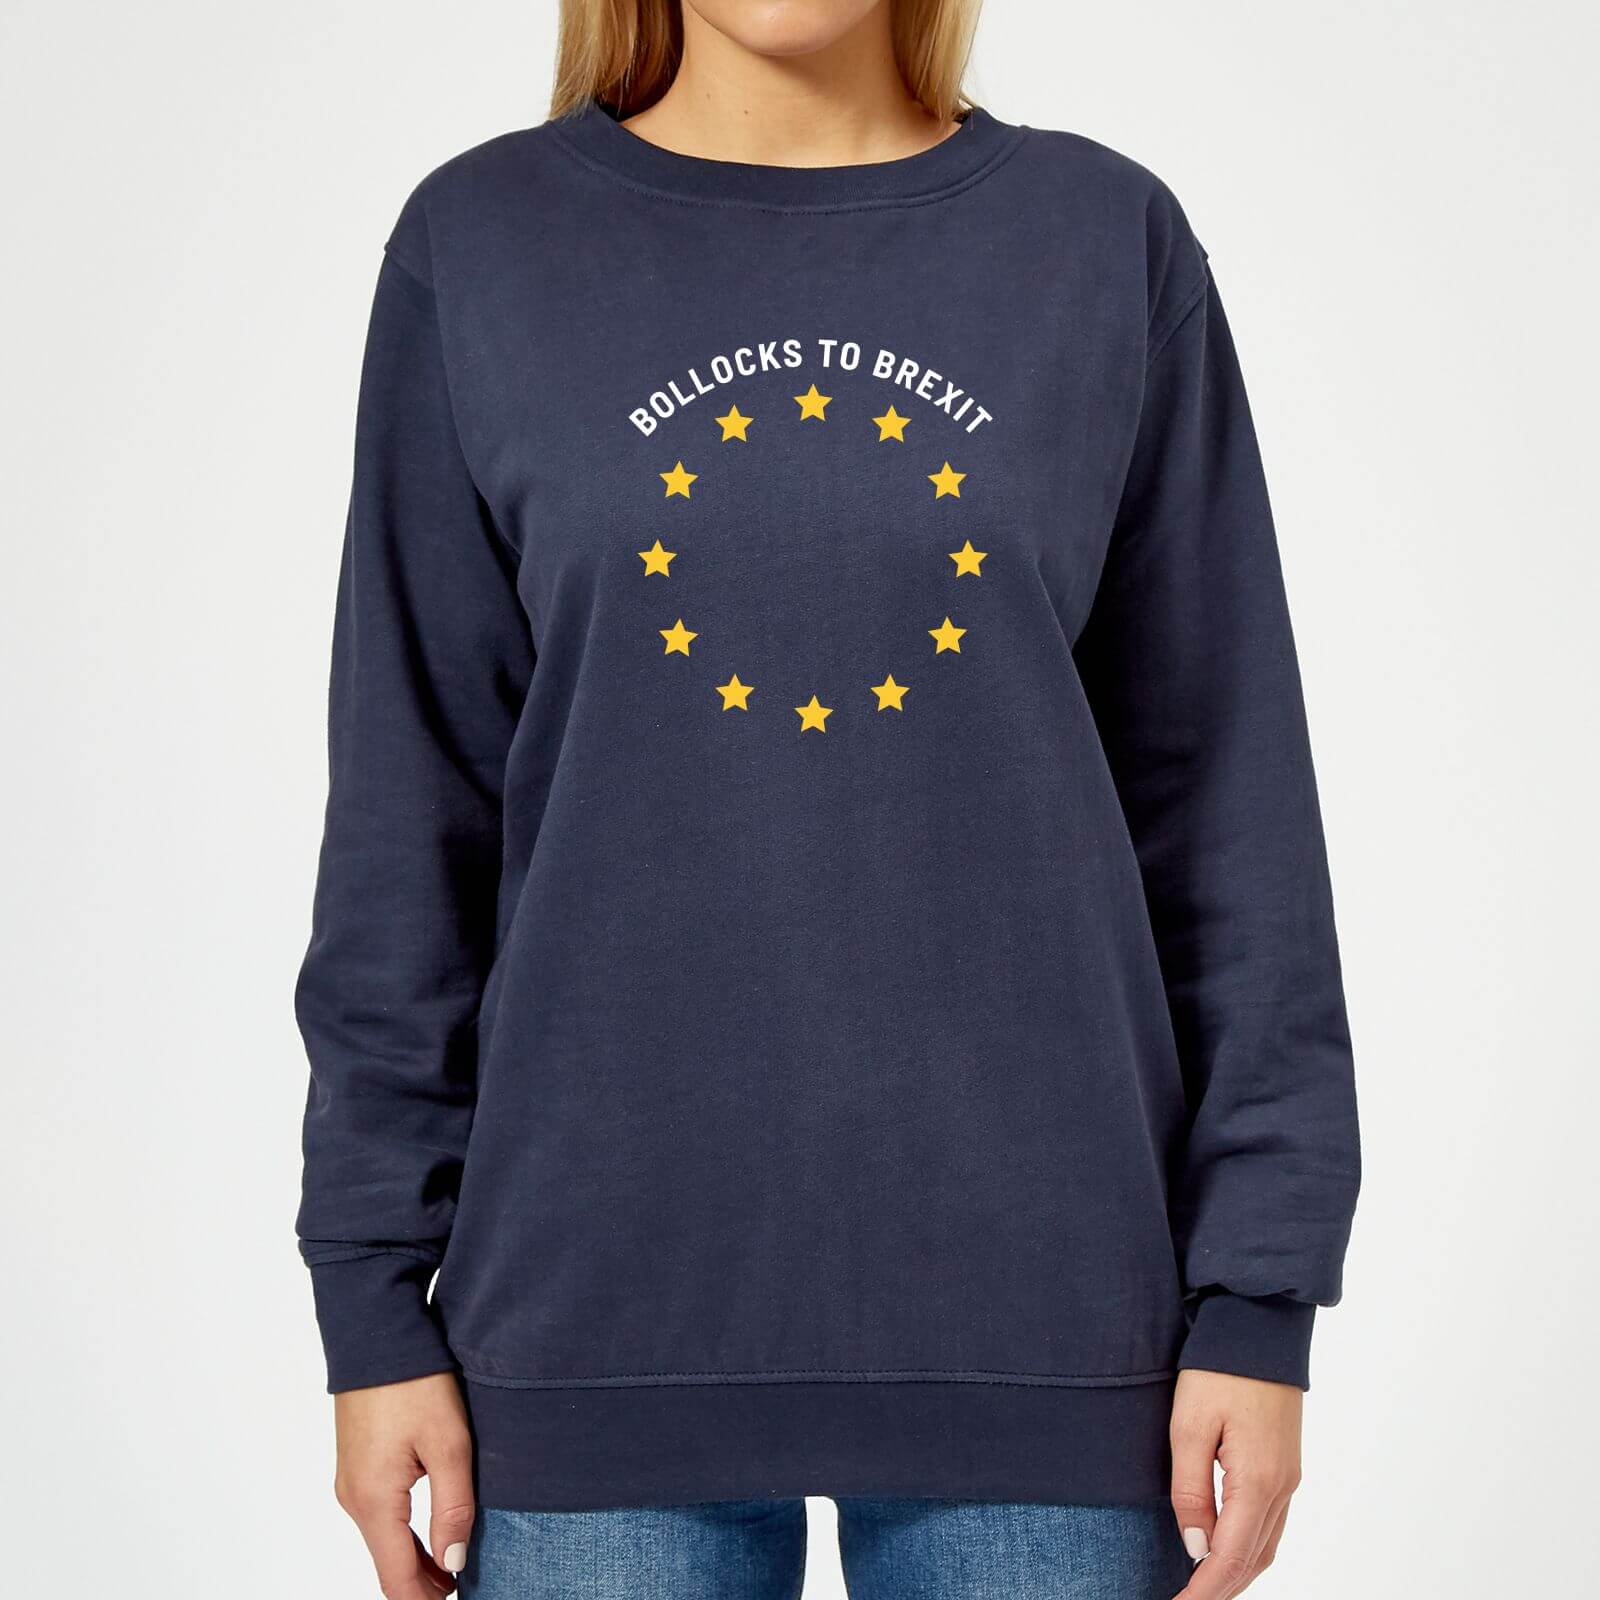 B*llocks To Brexit Women's Sweatshirt - Navy - XXL - Navy